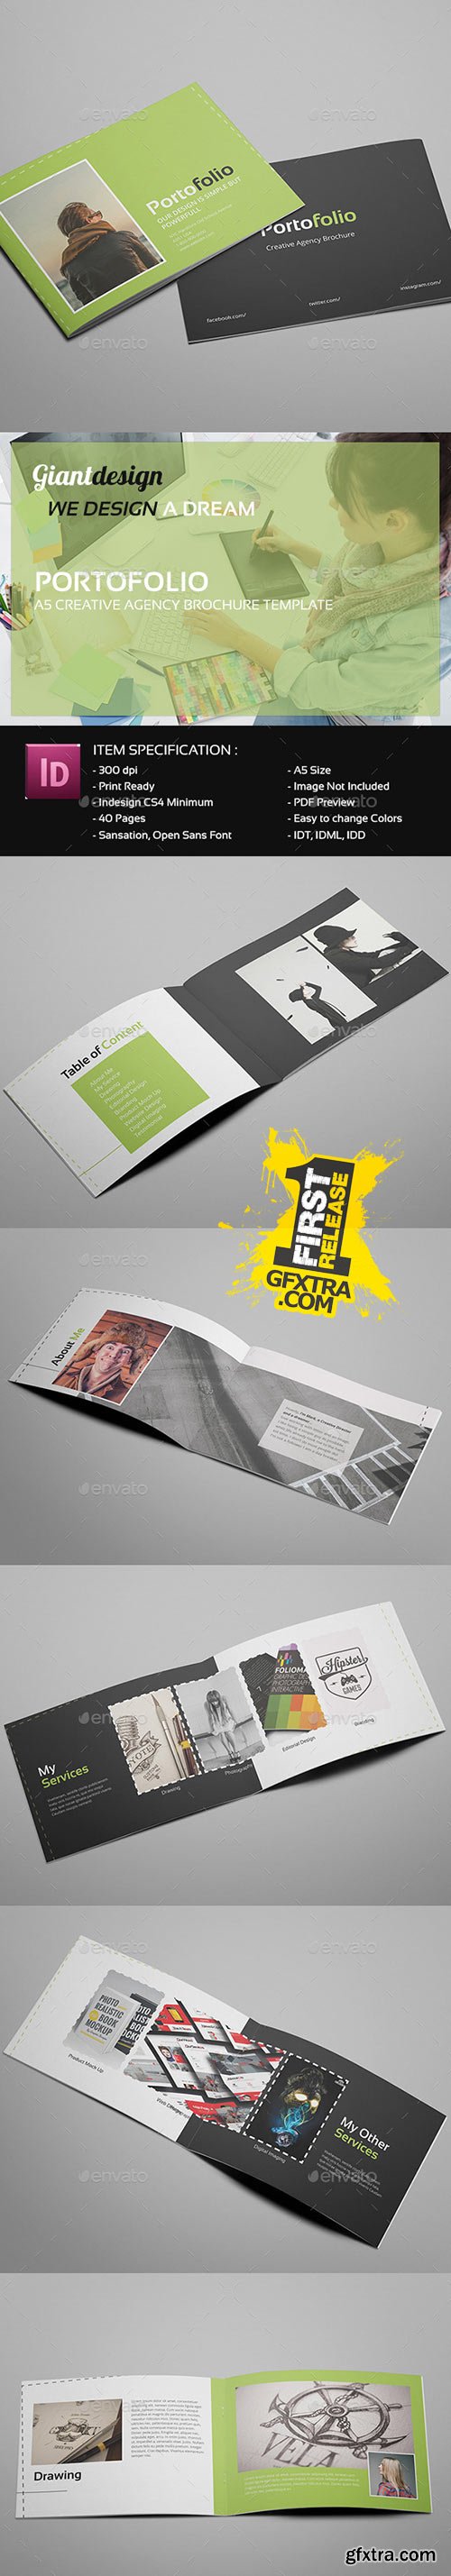 GraphicRiver - Portofolio - Creative Agency Brochure 11523367